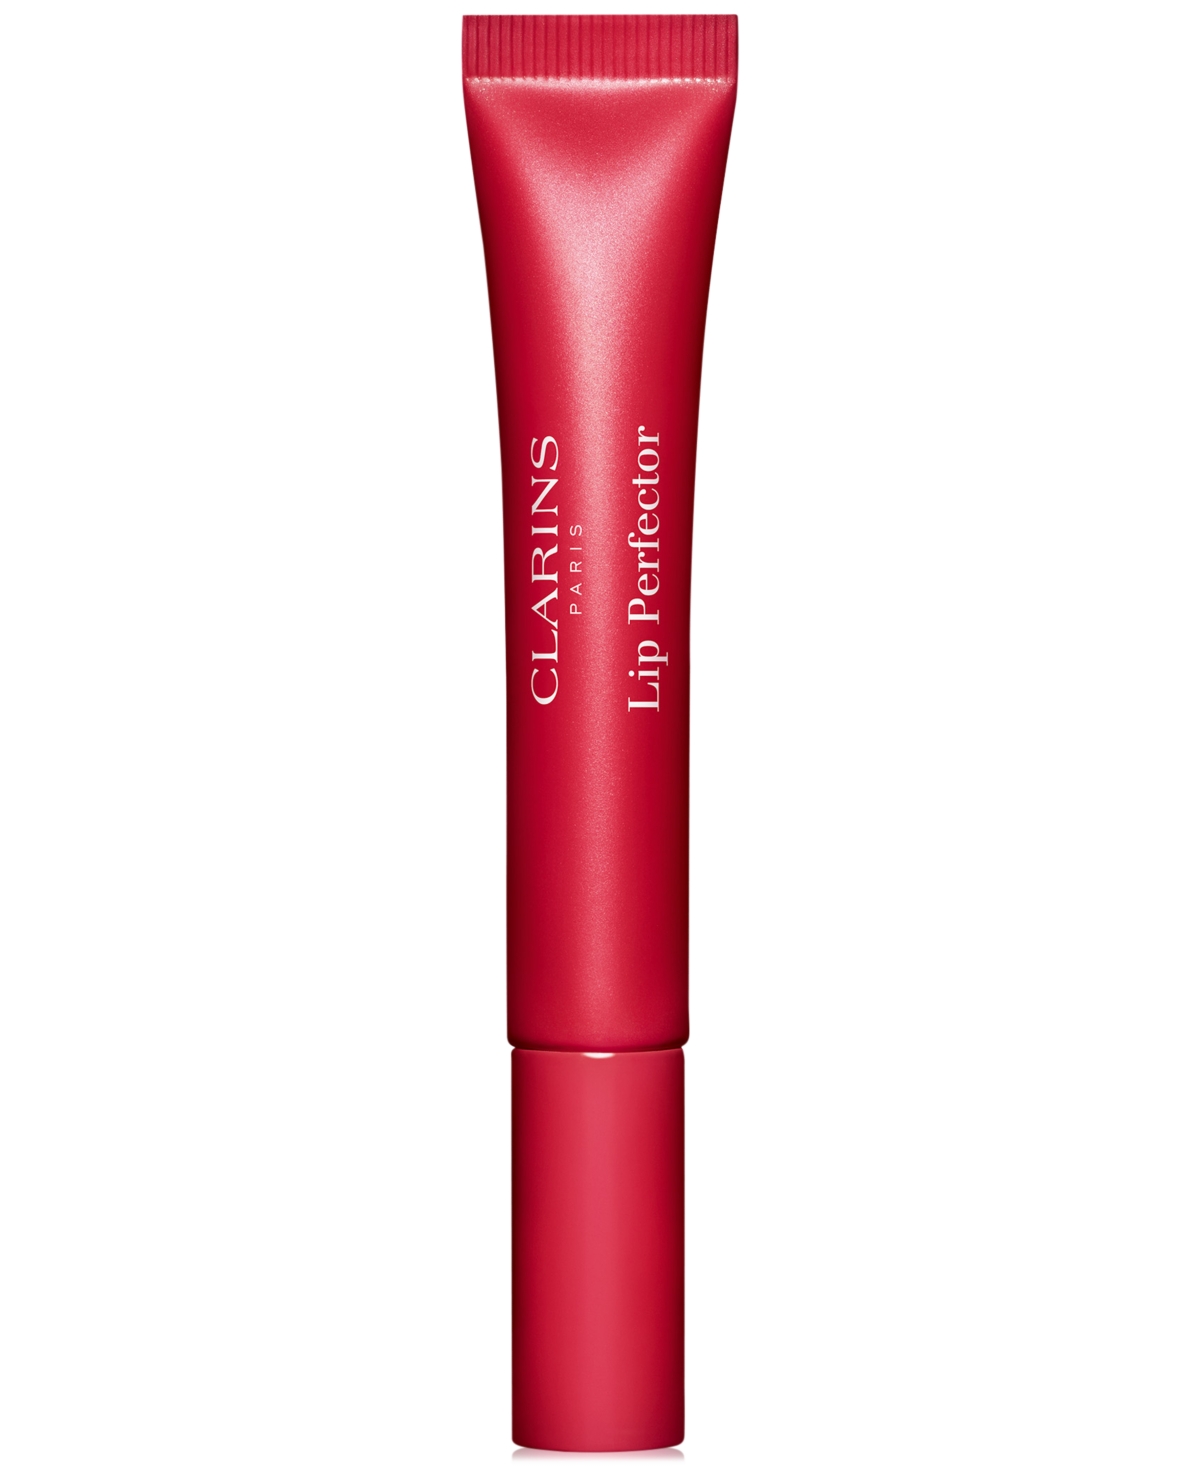 Clarins Lip Perfector 2-in-1 Lip & Cheek Color Balm In Fuchsia Glow